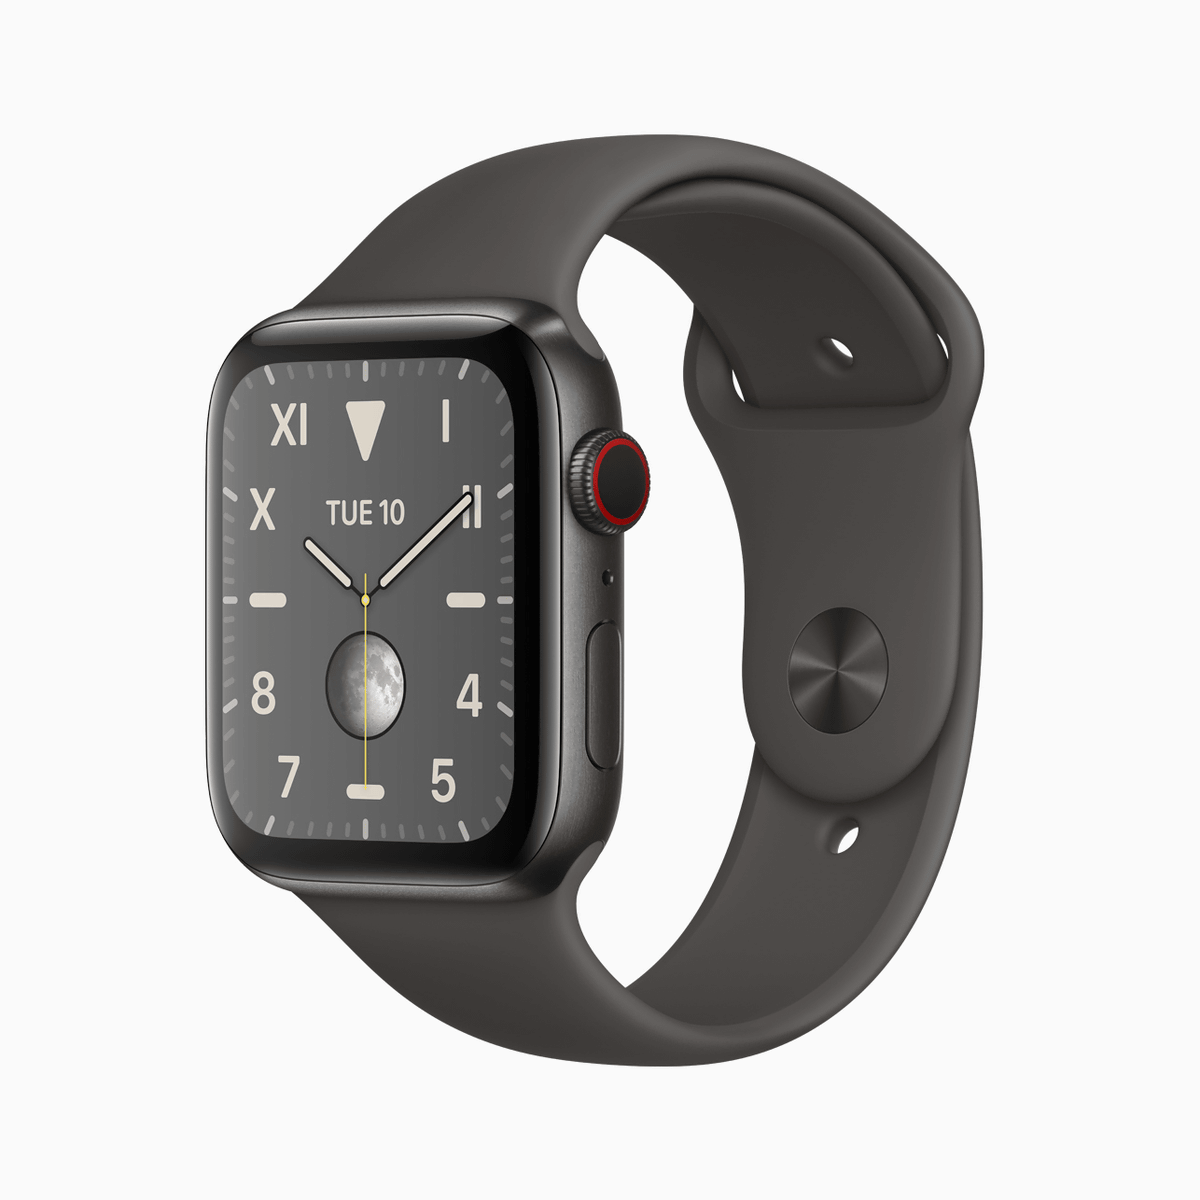 iPhone 11 Pro/Pro Max」「Apple Watch Series 5」などApple新製品の高 ...